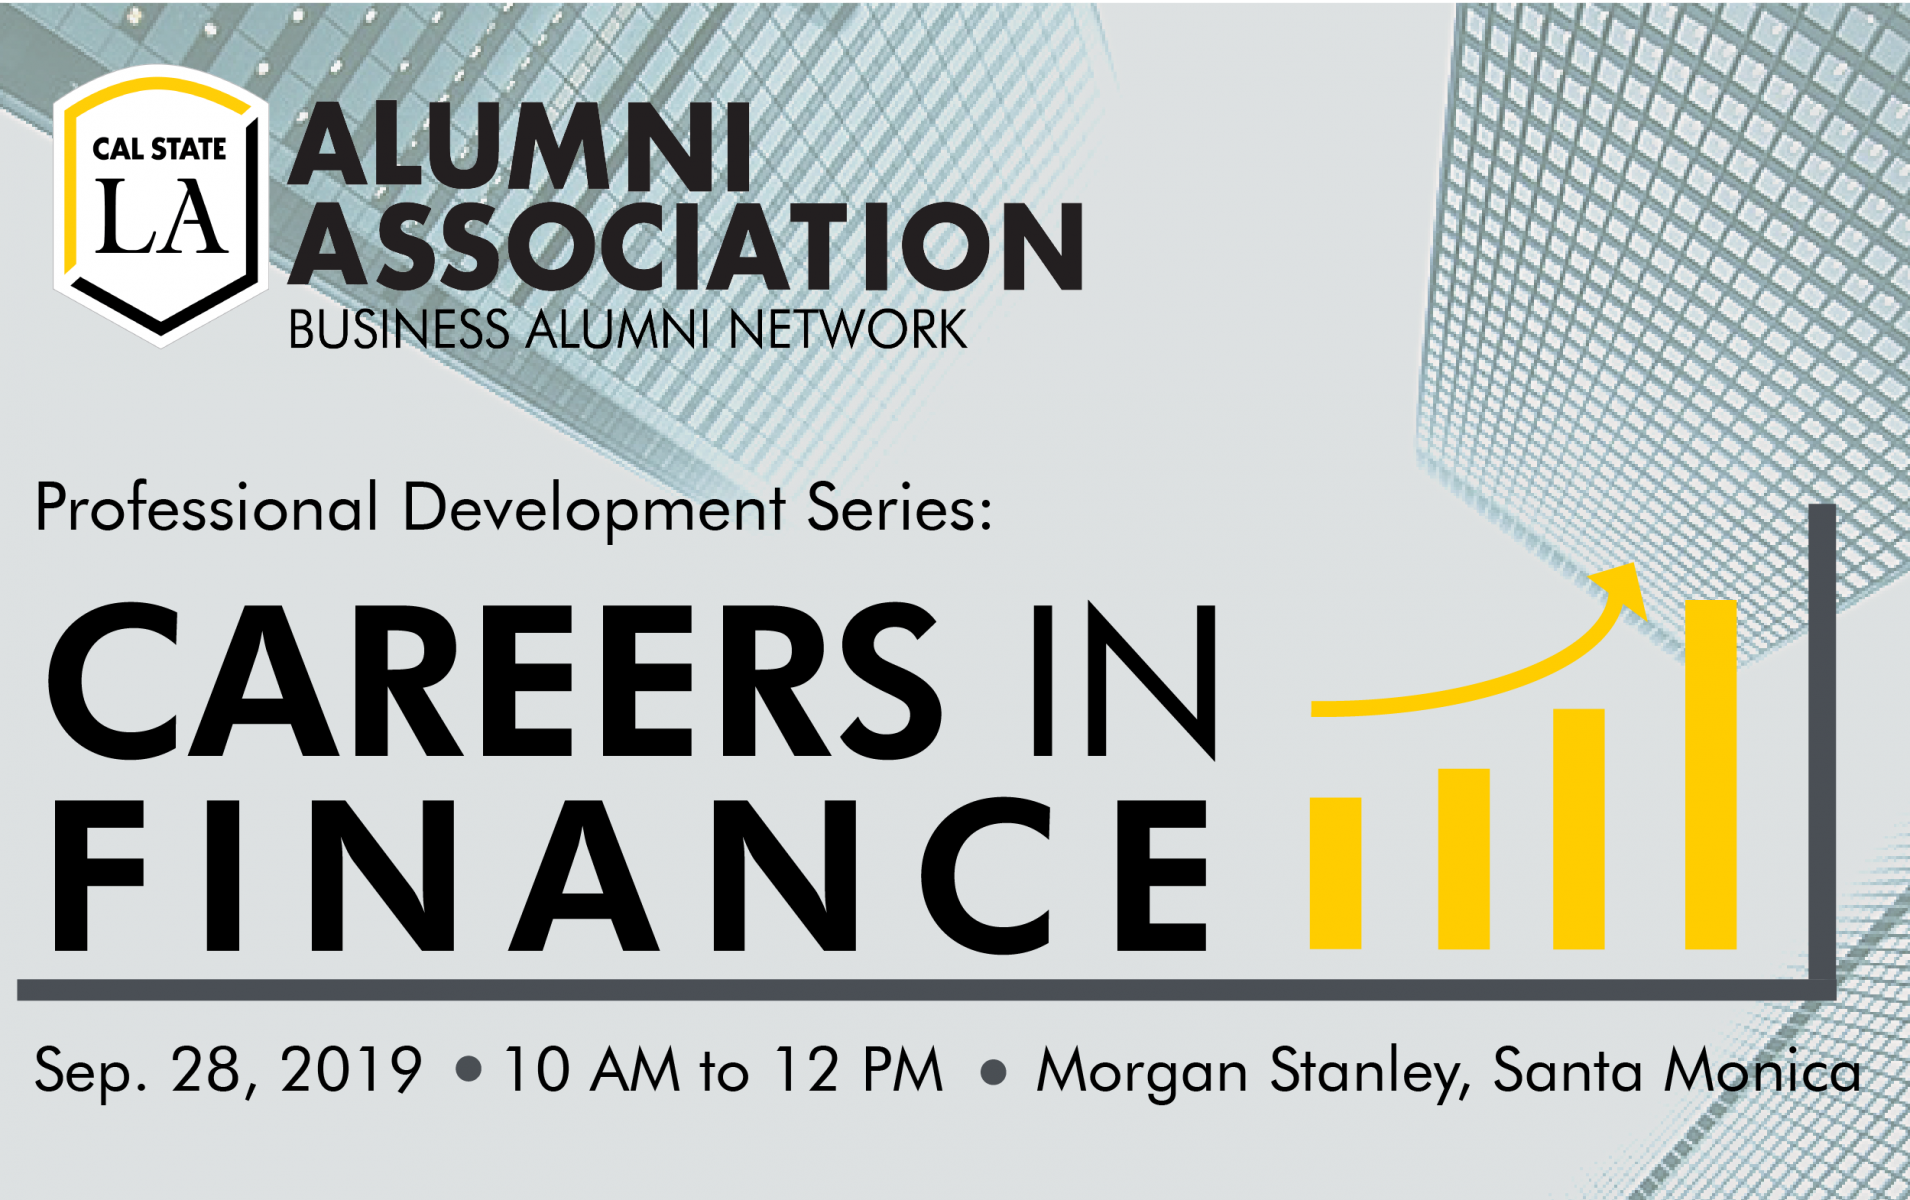 Careers in Finance on September 28, 2019 at Morgan Stanley, Santa Monica